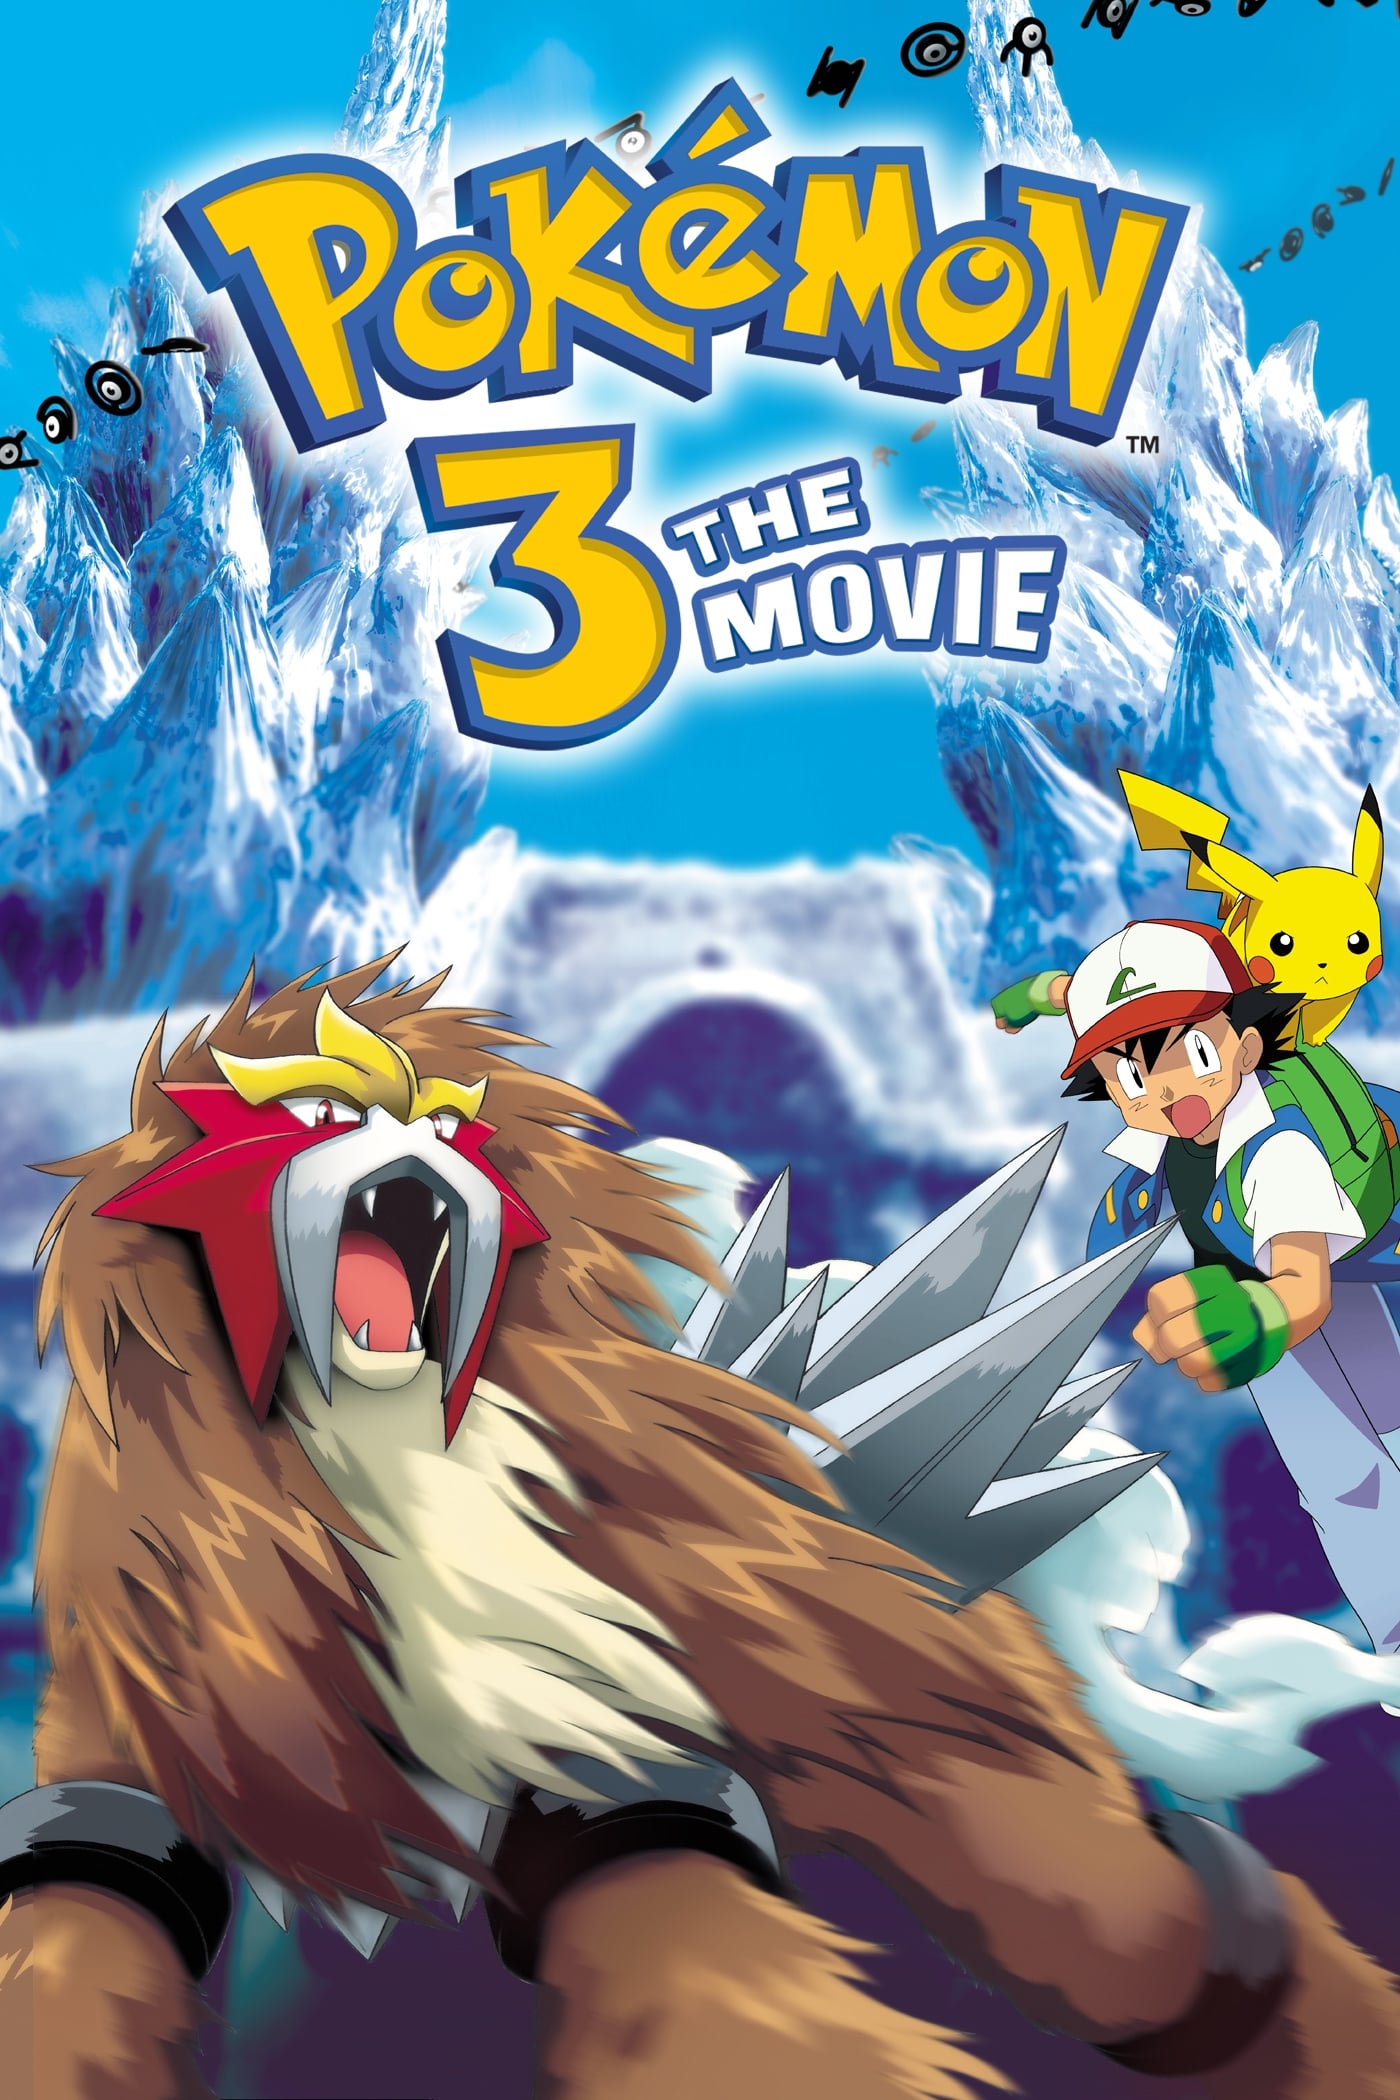 Pokémon 3: The Movie - Spell of the Unown (2000)